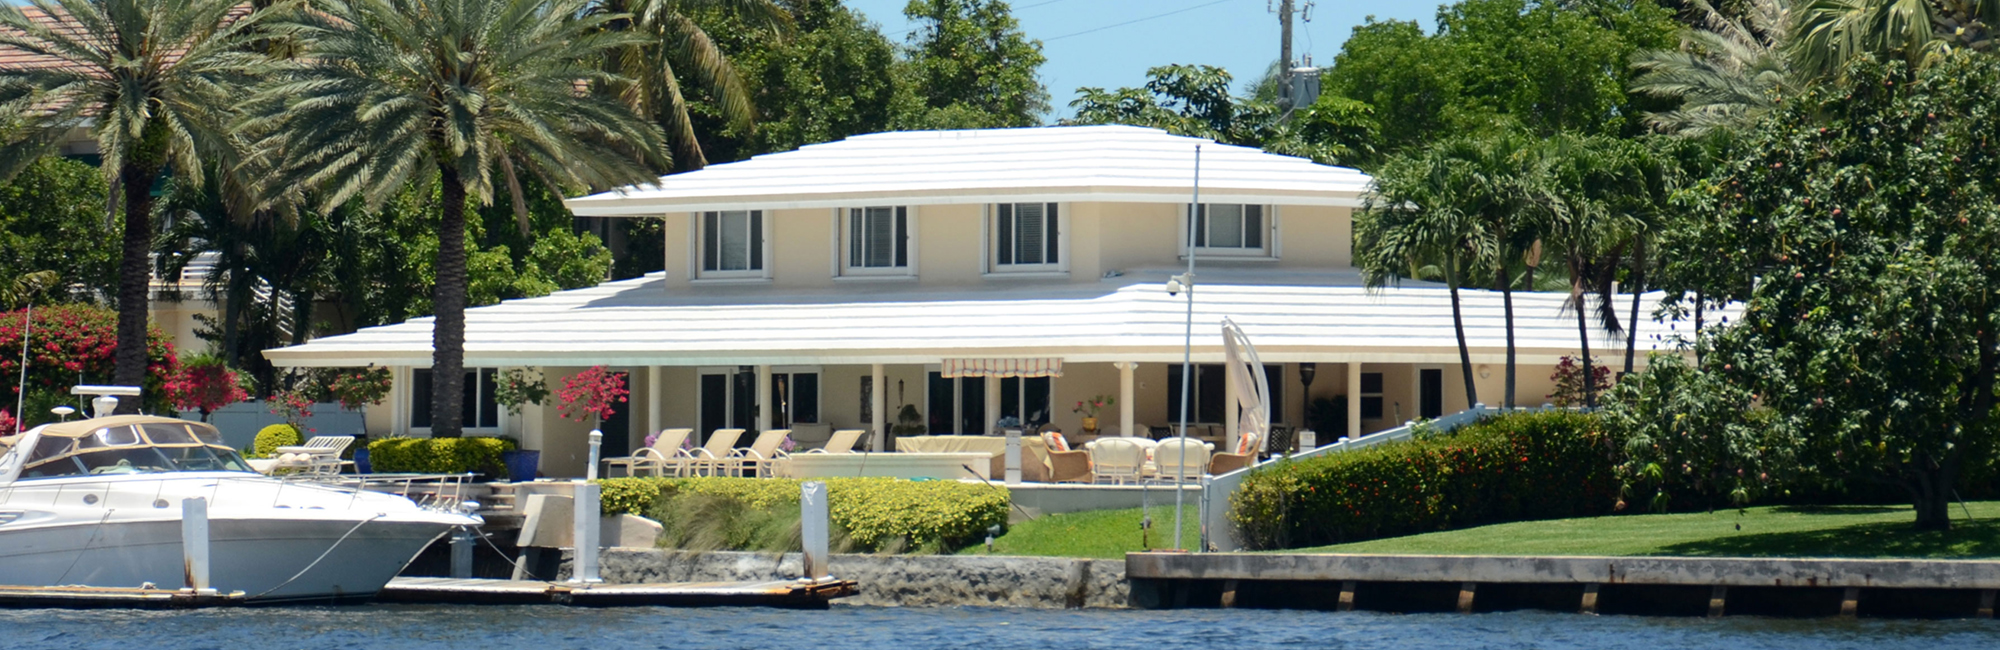 Florida Luxury Home